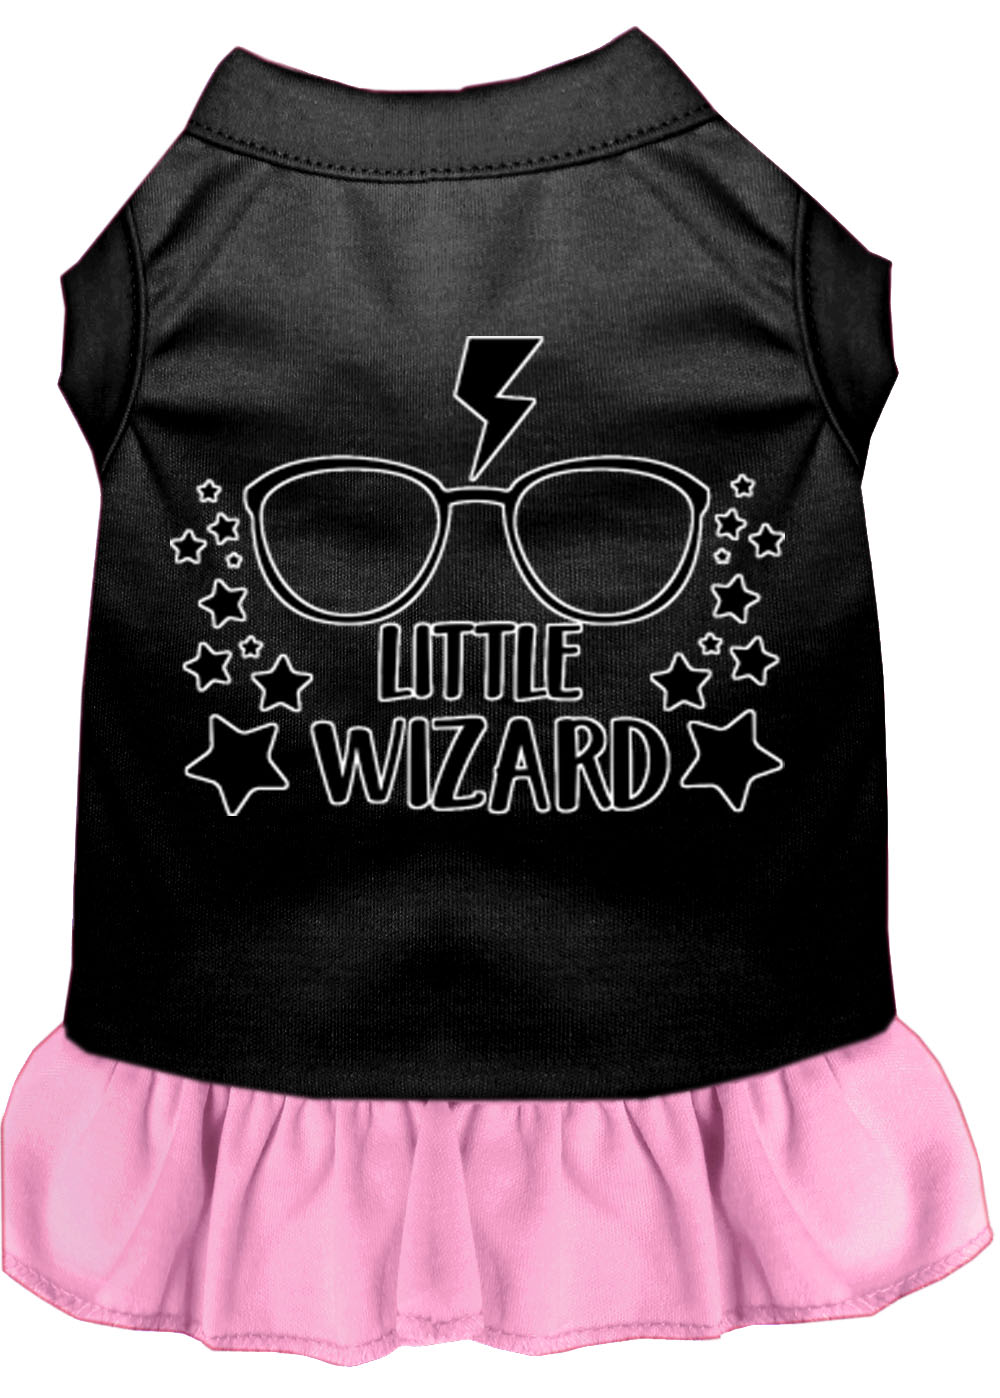 Little Wizard Screen Print Dog Dress Black with Light Pink Lg